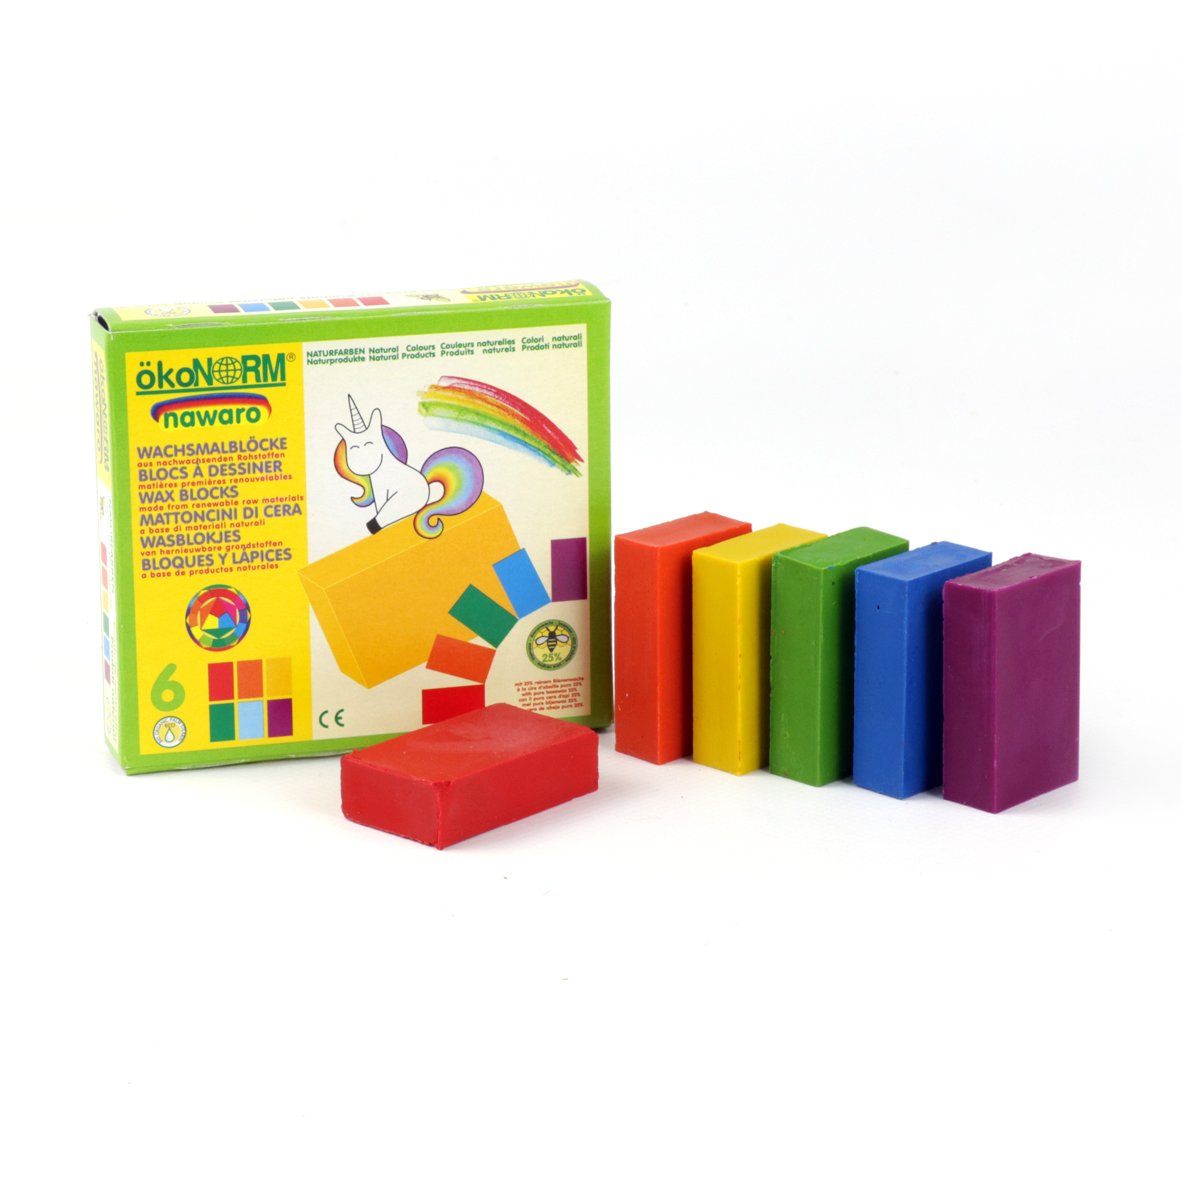 OKONORM Wax Blocks - Six Colours Art Pencils OkoNORM 